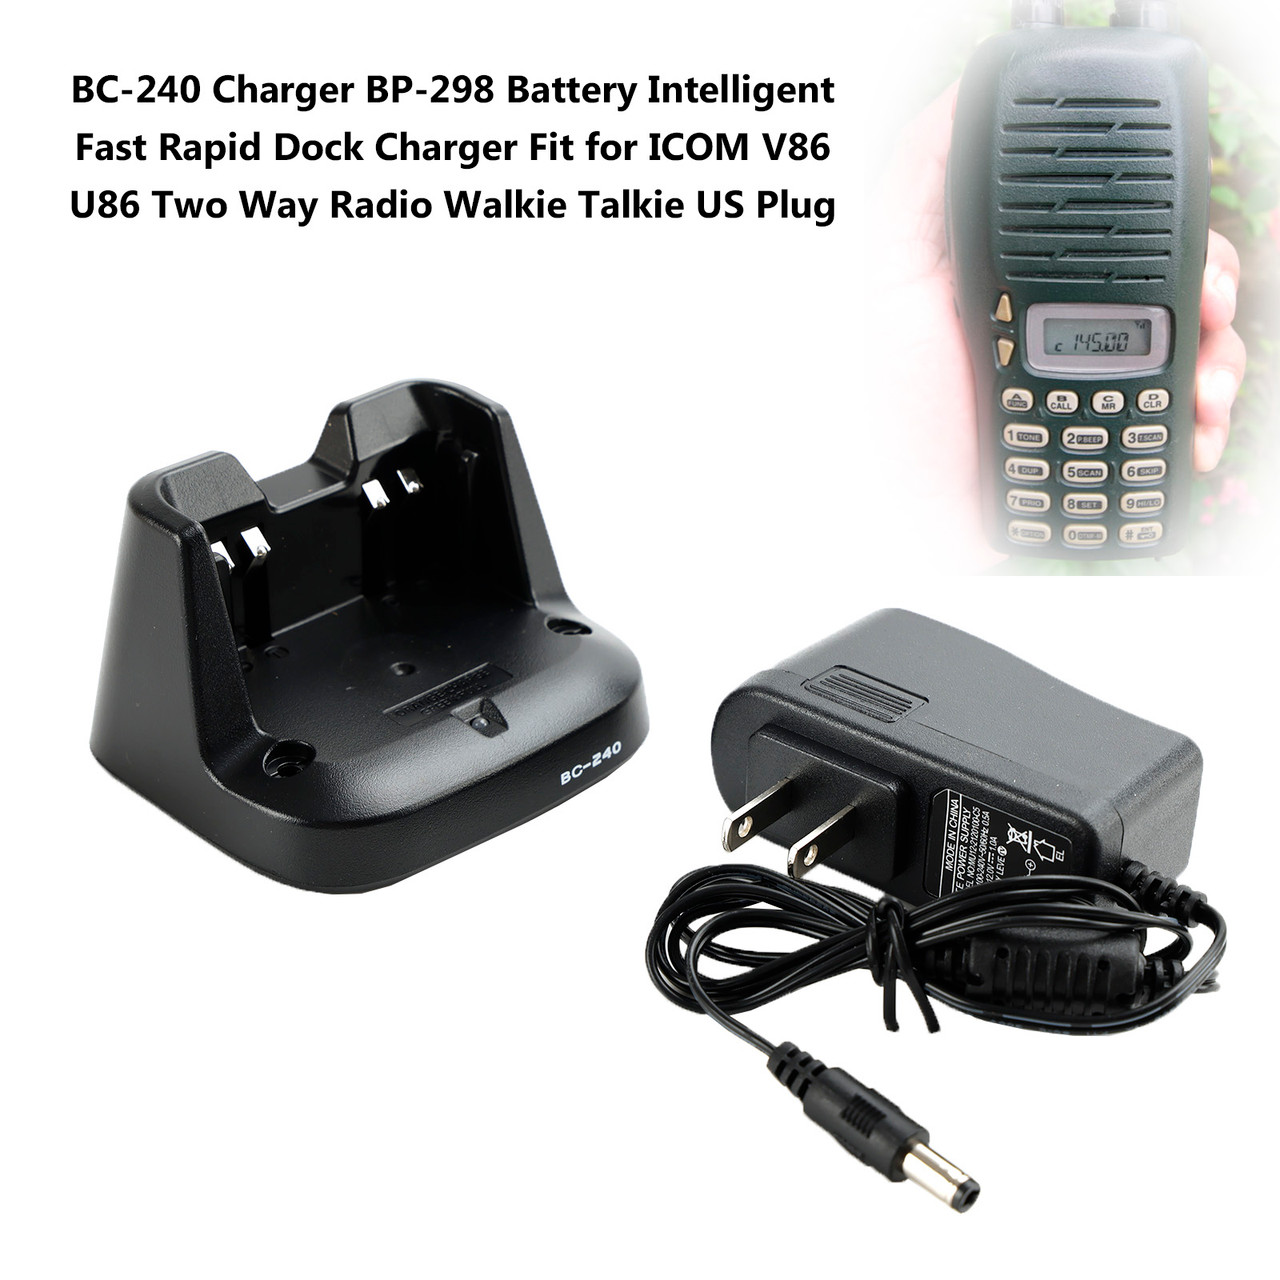 BC-240 Charger BP-298 Battery Fast Rapid Dock Charger for ICOM V86 U86 US Plug